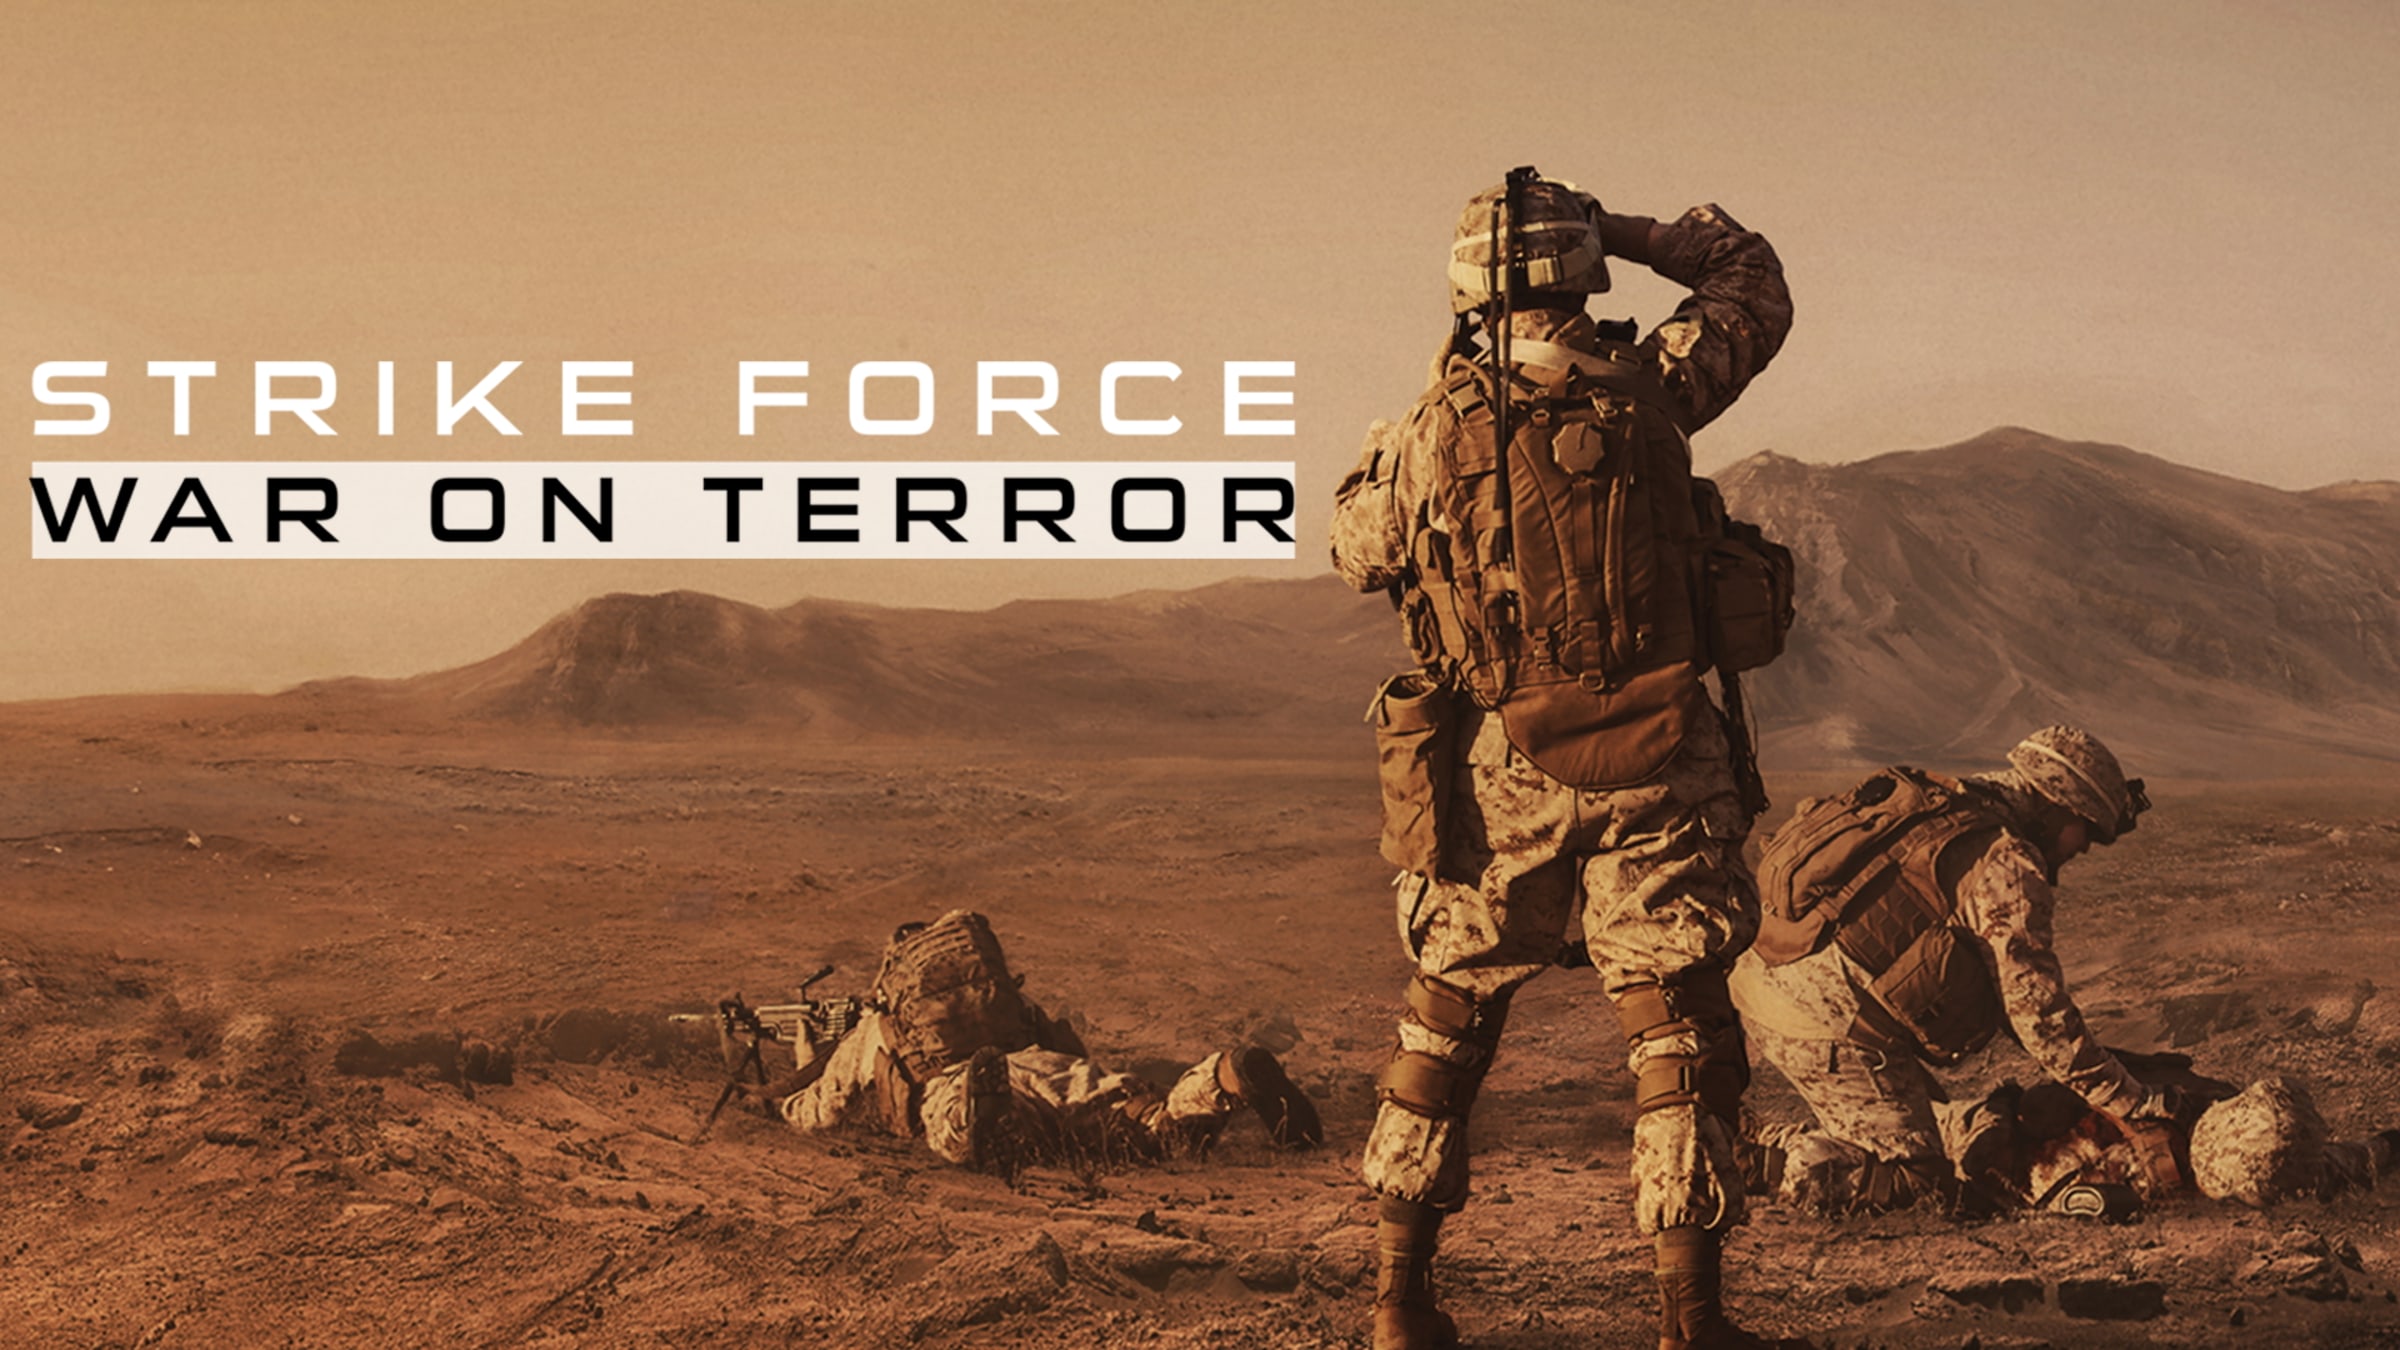 Anti-Terror Strike  Play Now Online for Free 